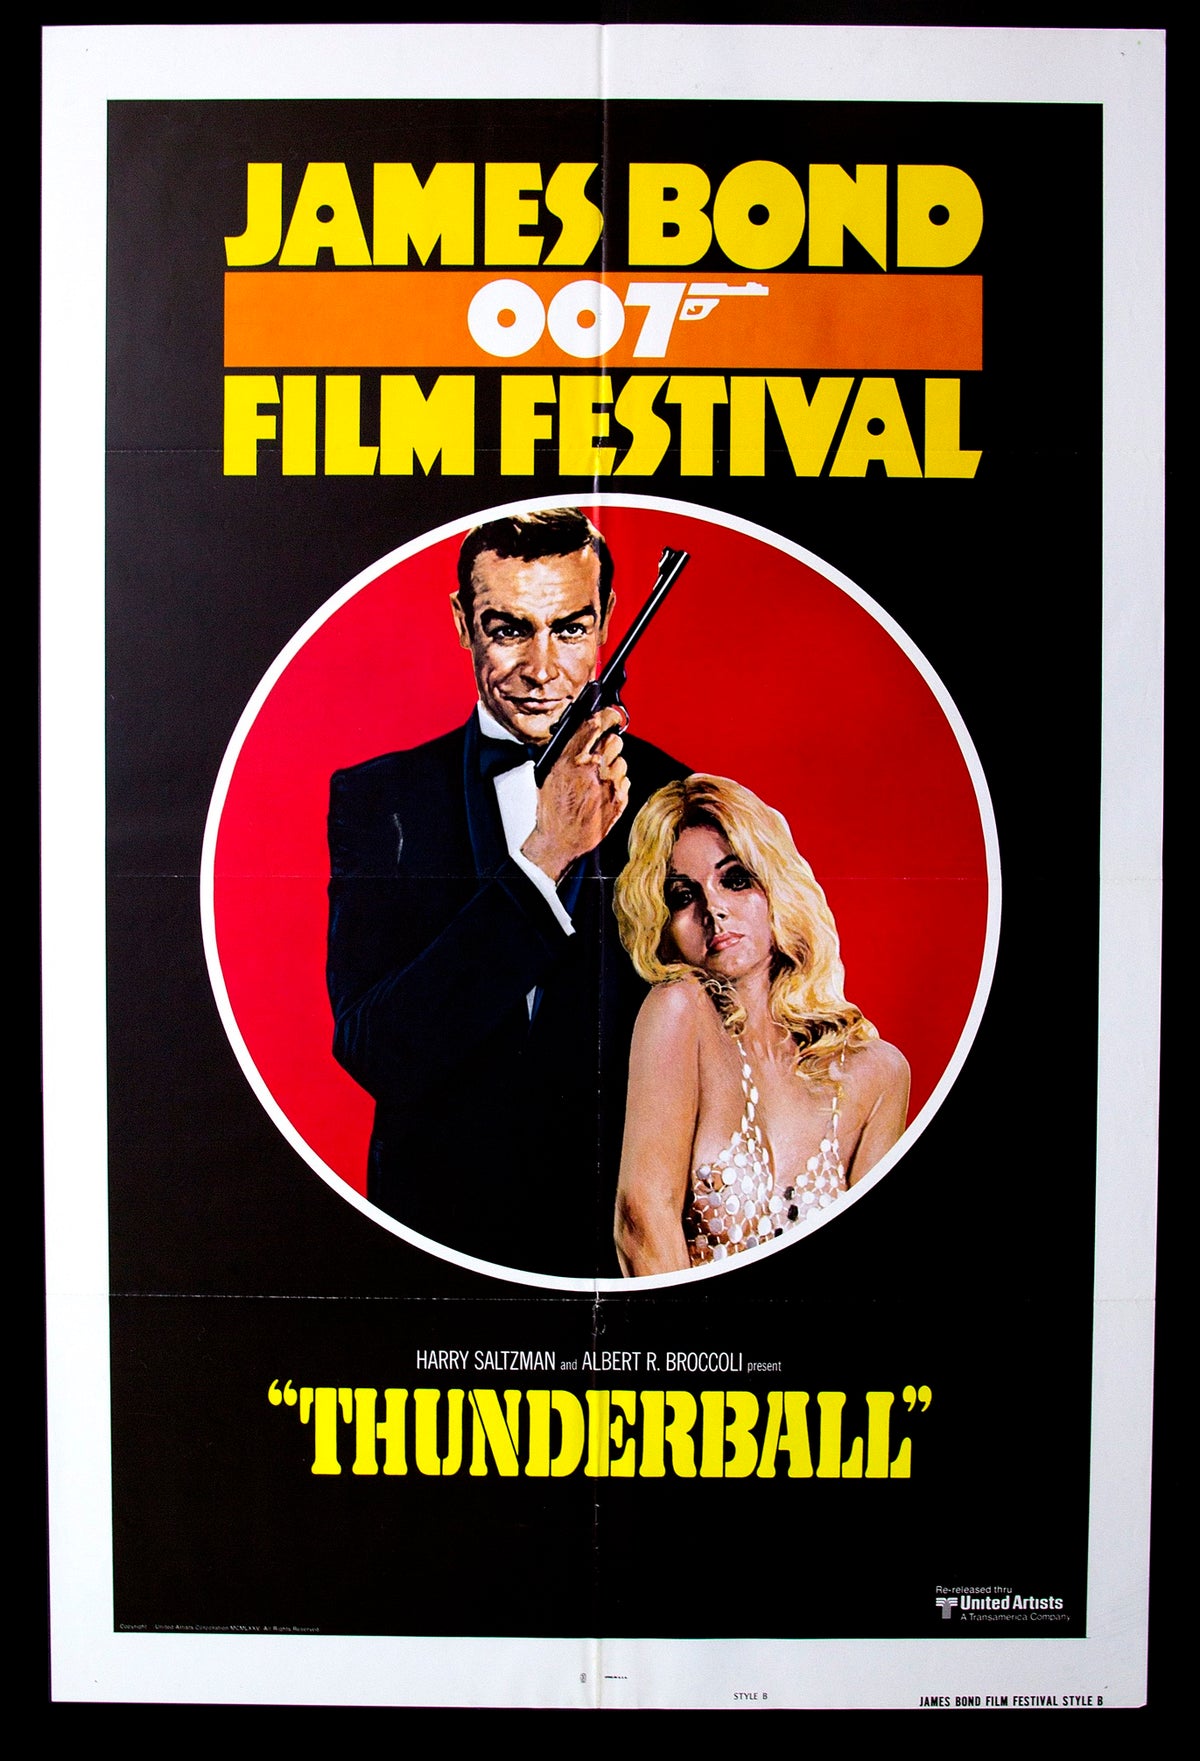 James Bond 007 Film Festival - Thunderball (1975) original movie poster for sale at Original Film Art